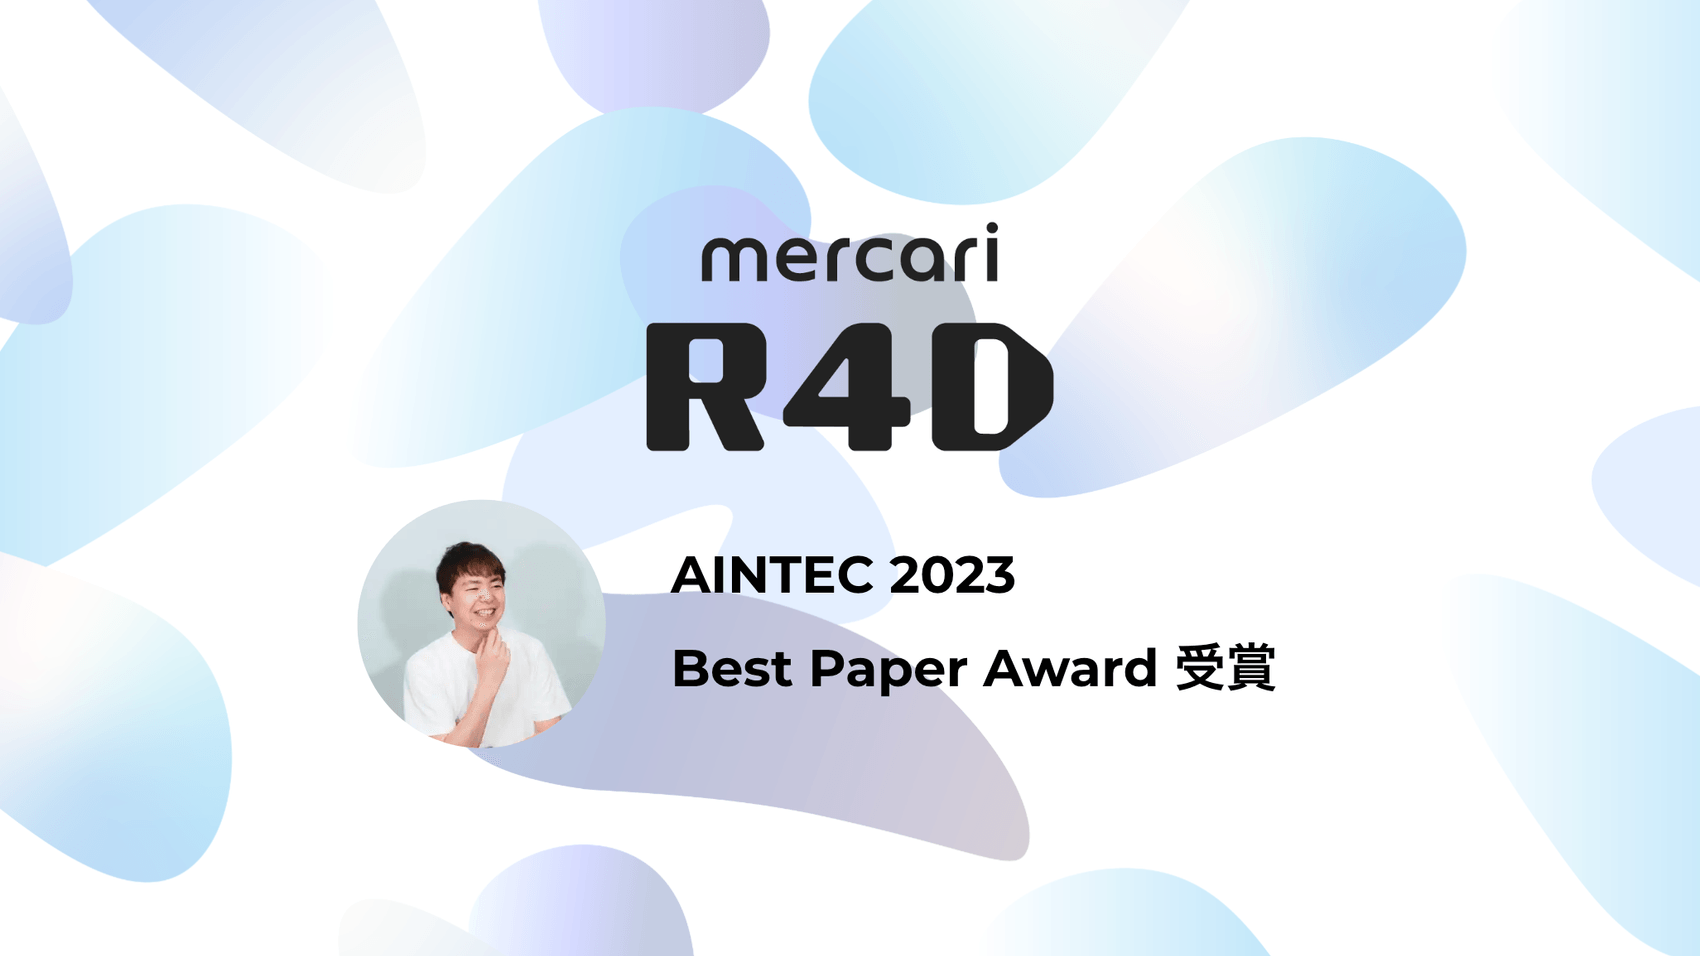 R4Dリサーチャー・栗田と慶應義塾大学の共同研究成果が「AINTEC 2023」においてBest Paper Awardを受賞